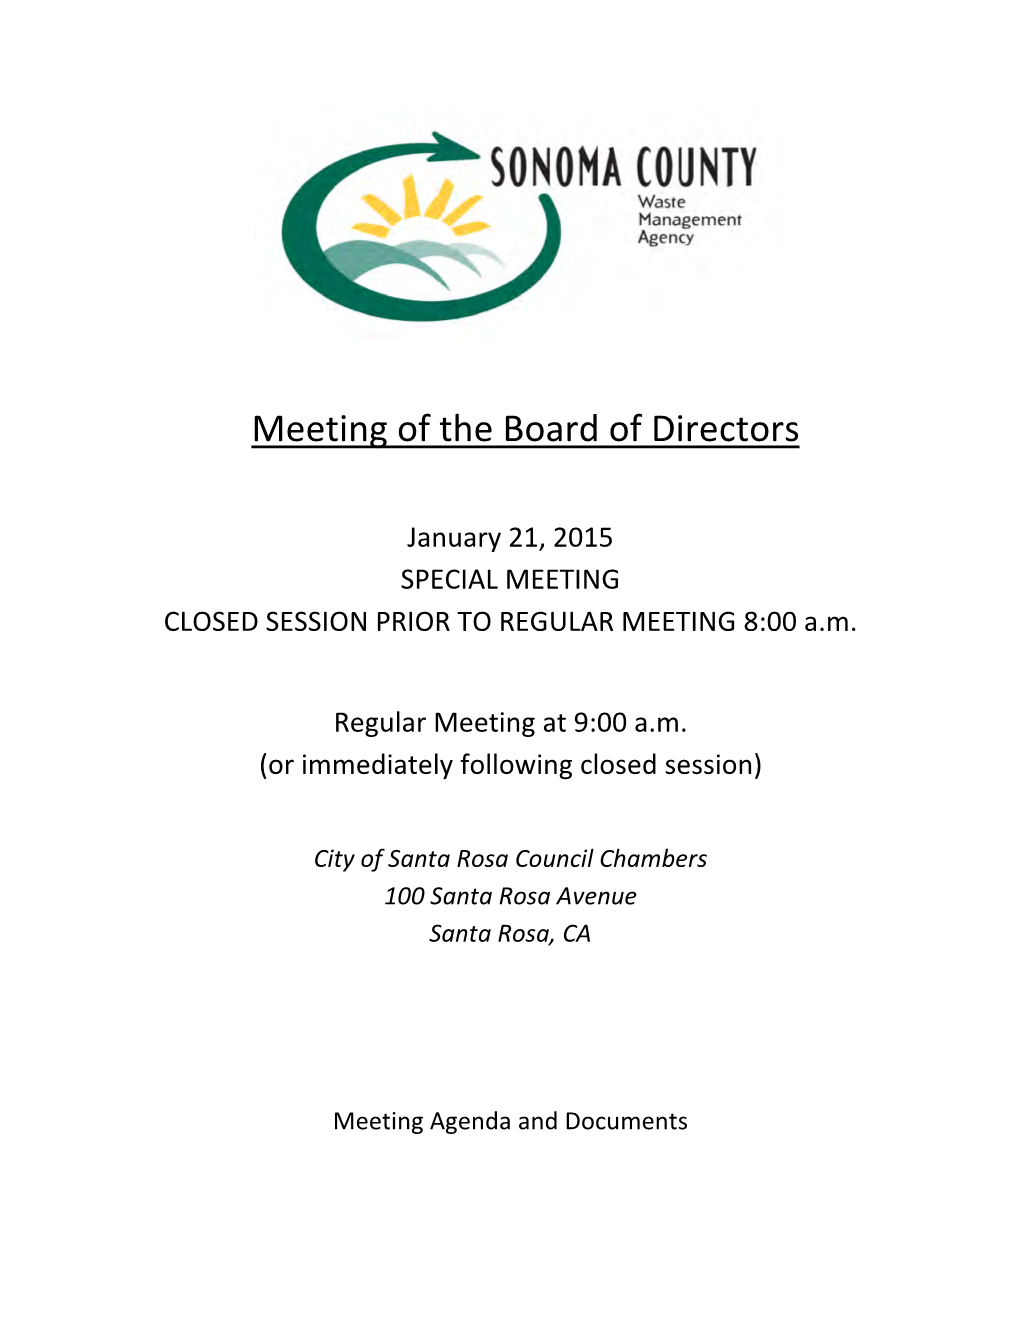 Sonoma County Waste Management Agency Agenda Packet January 21, 2015